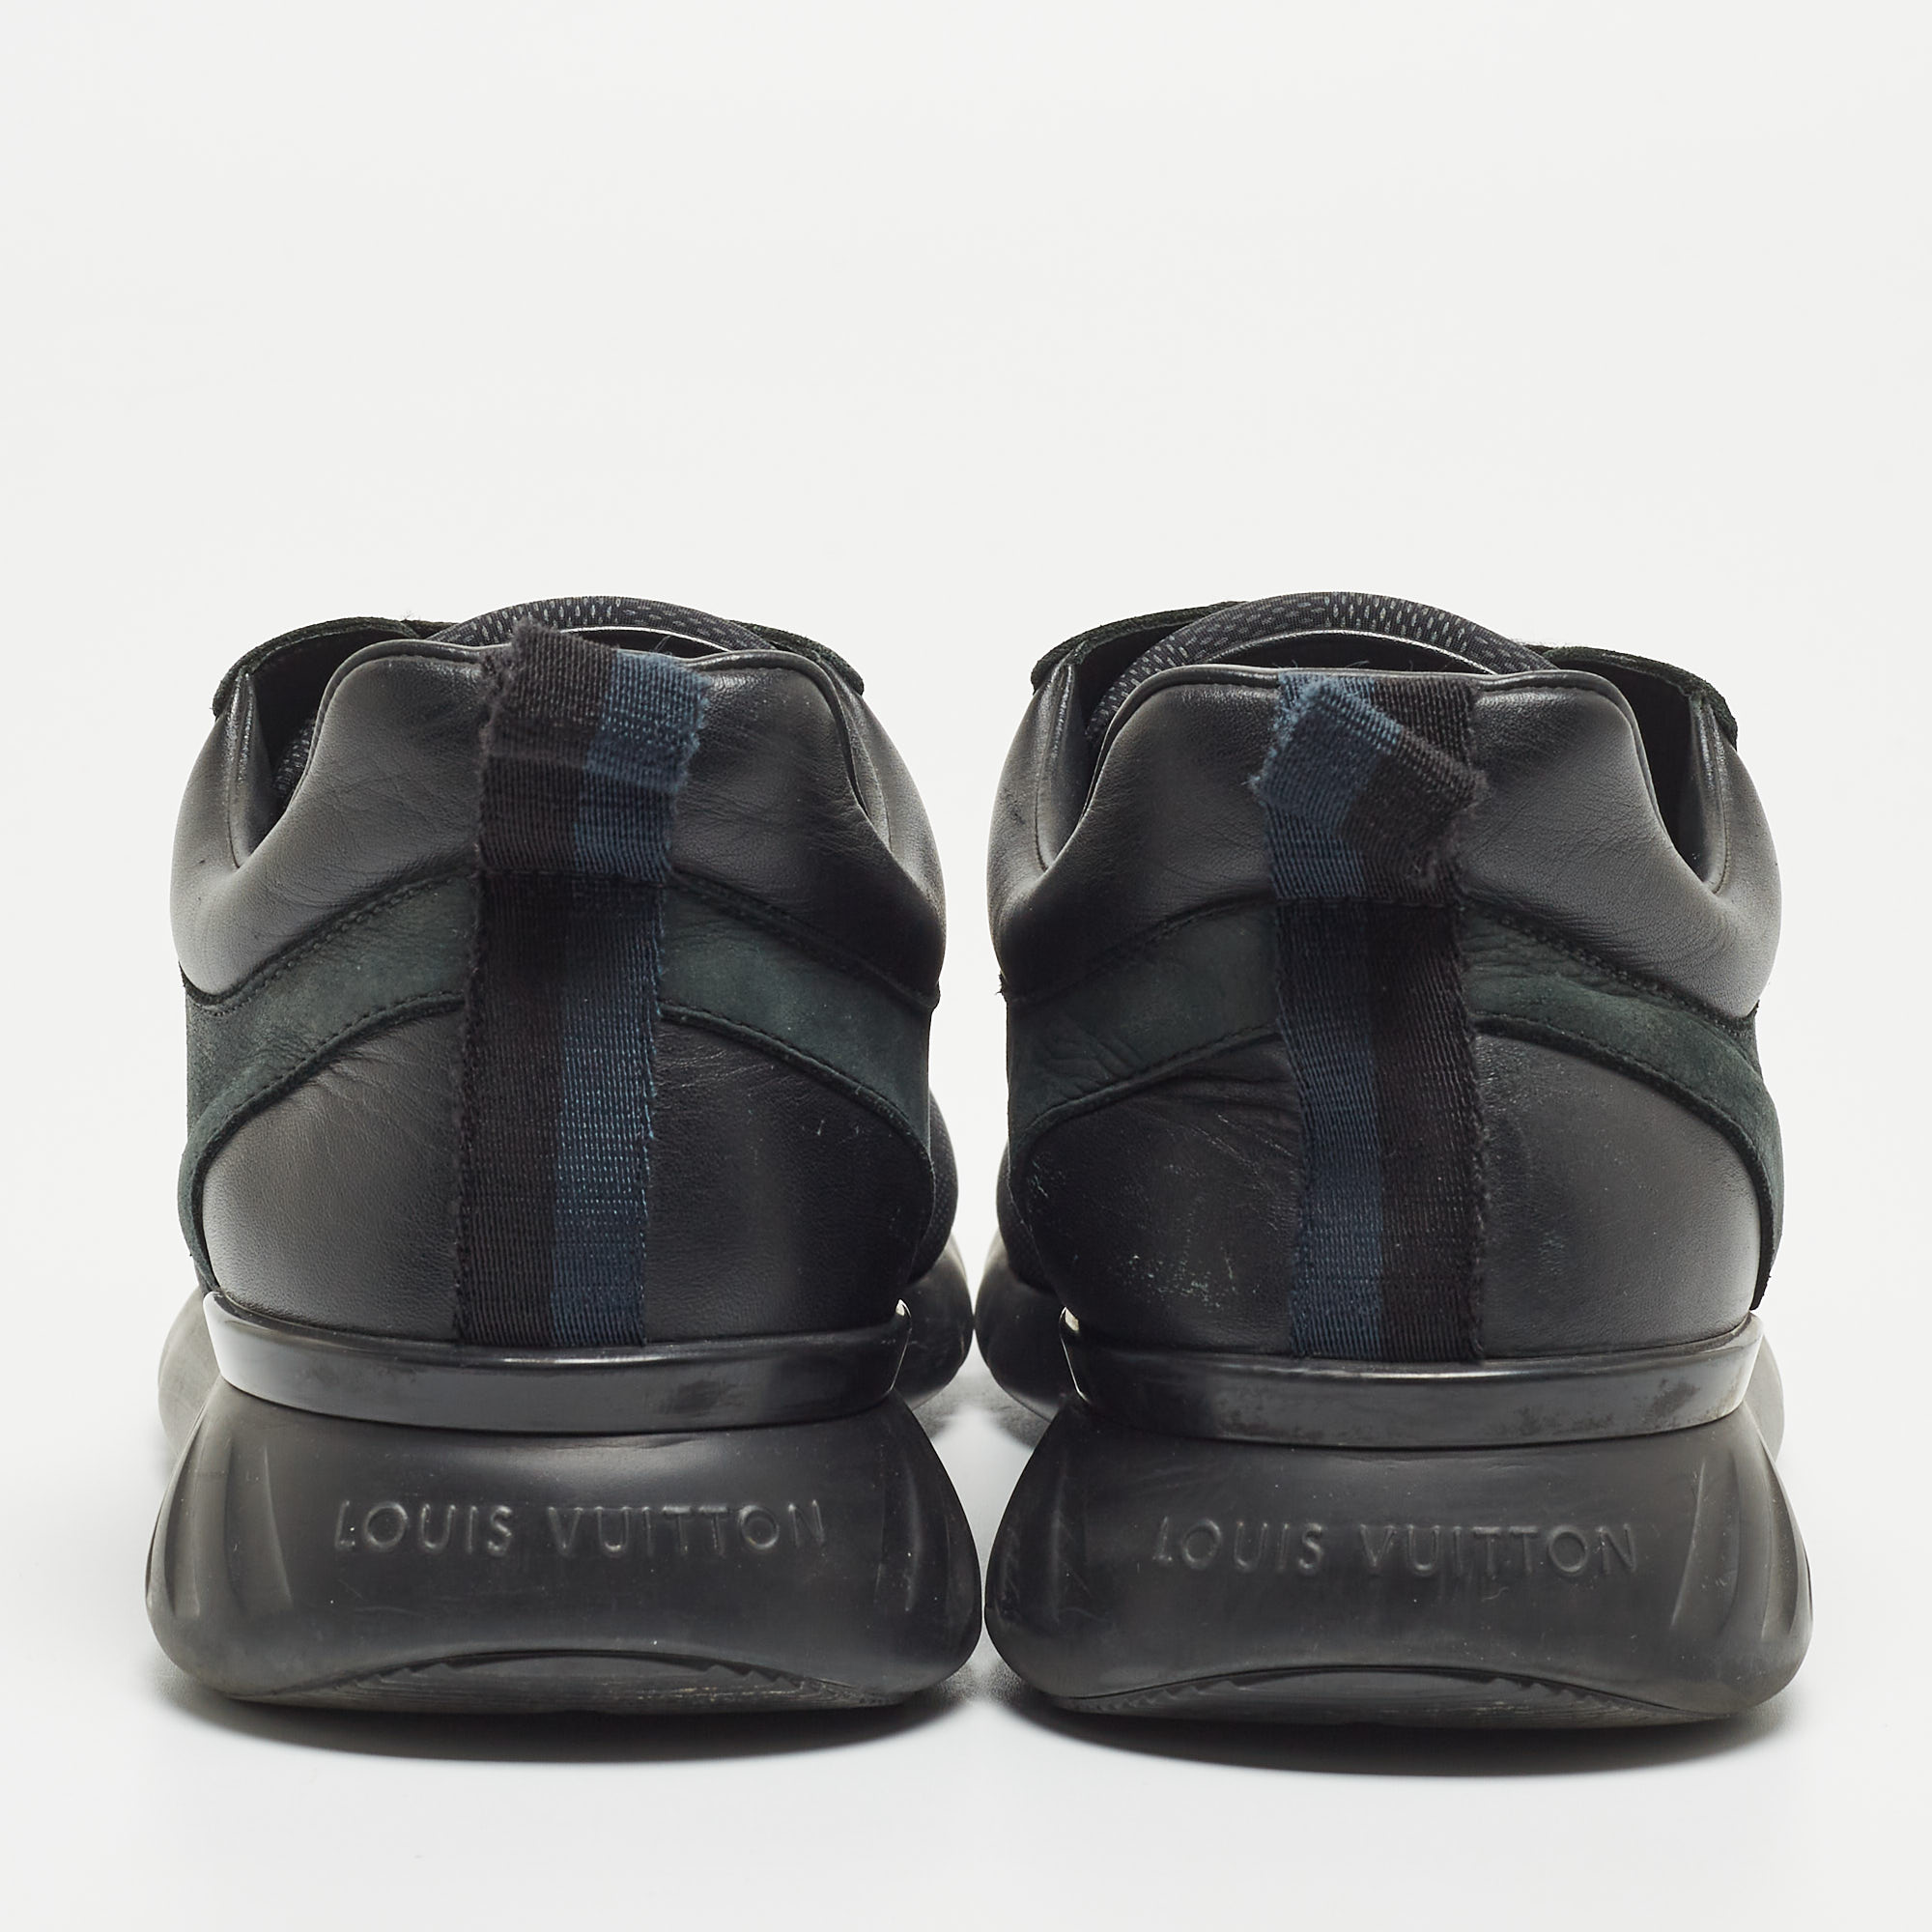 Louis Vuitton Black/Green Leather And Nylon Fastlane Sneakers Size 41